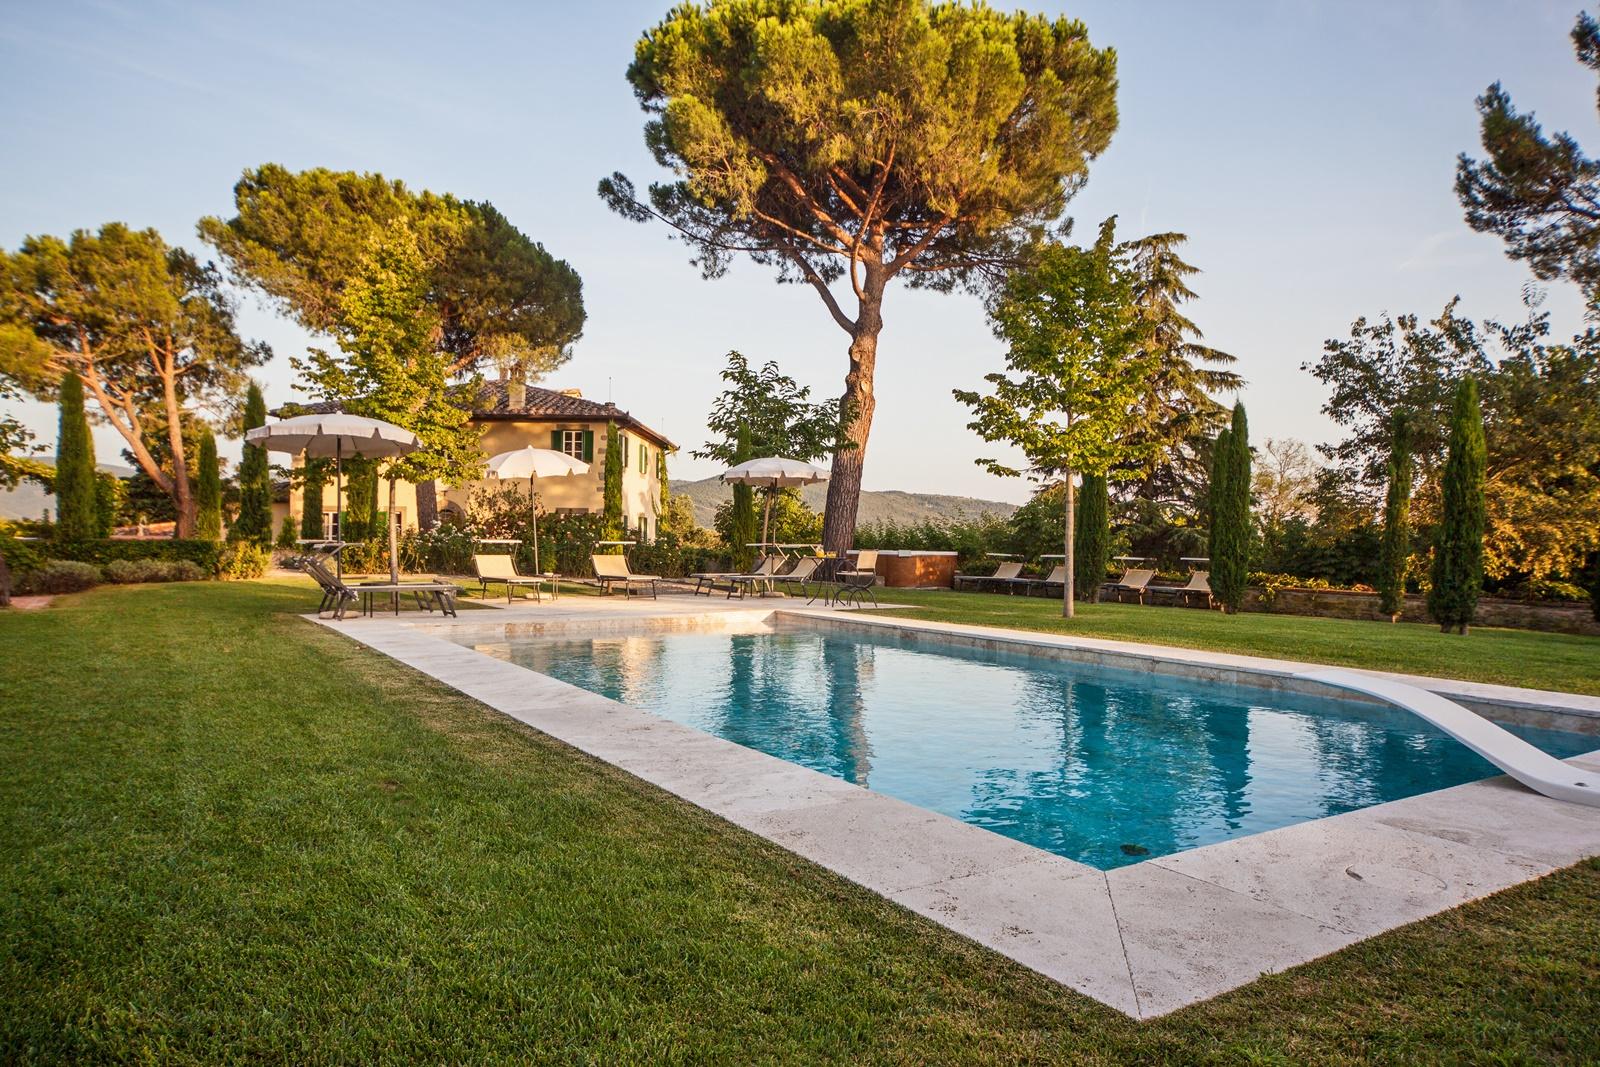 The swimming pool of Villa Nocciola, Tuscany